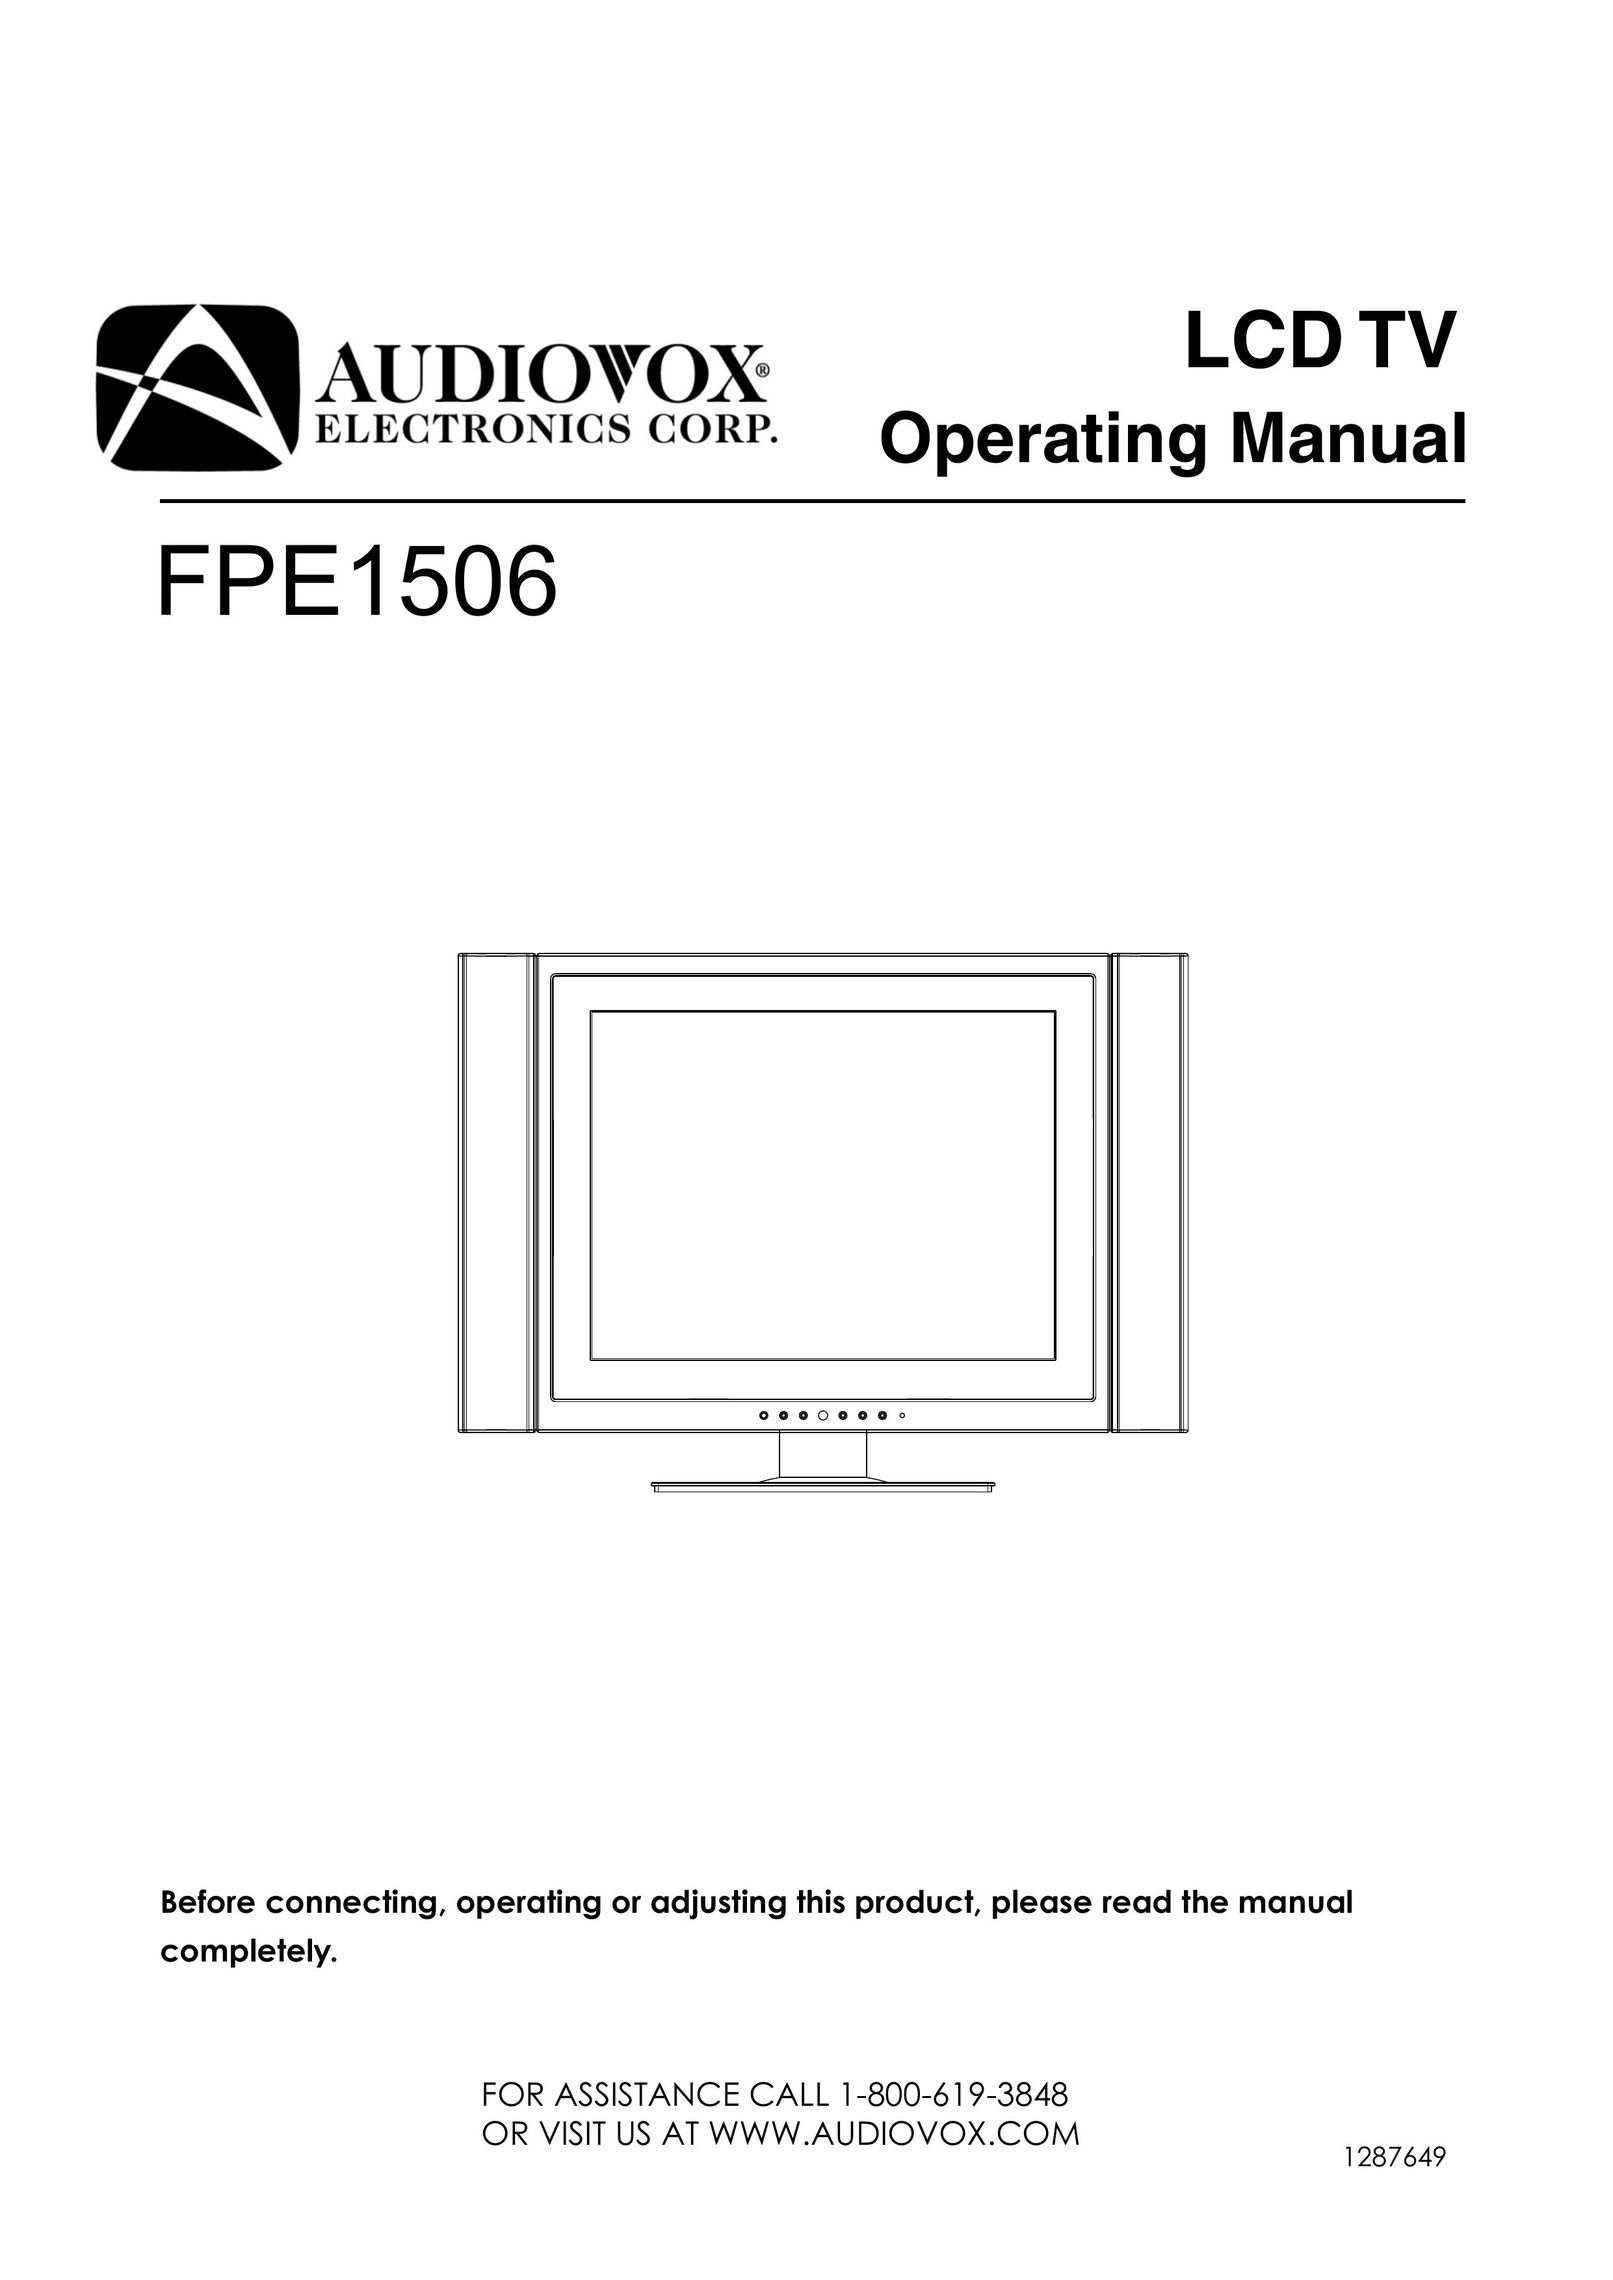 Audiovox FPE1506 Flat Panel Television User Manual